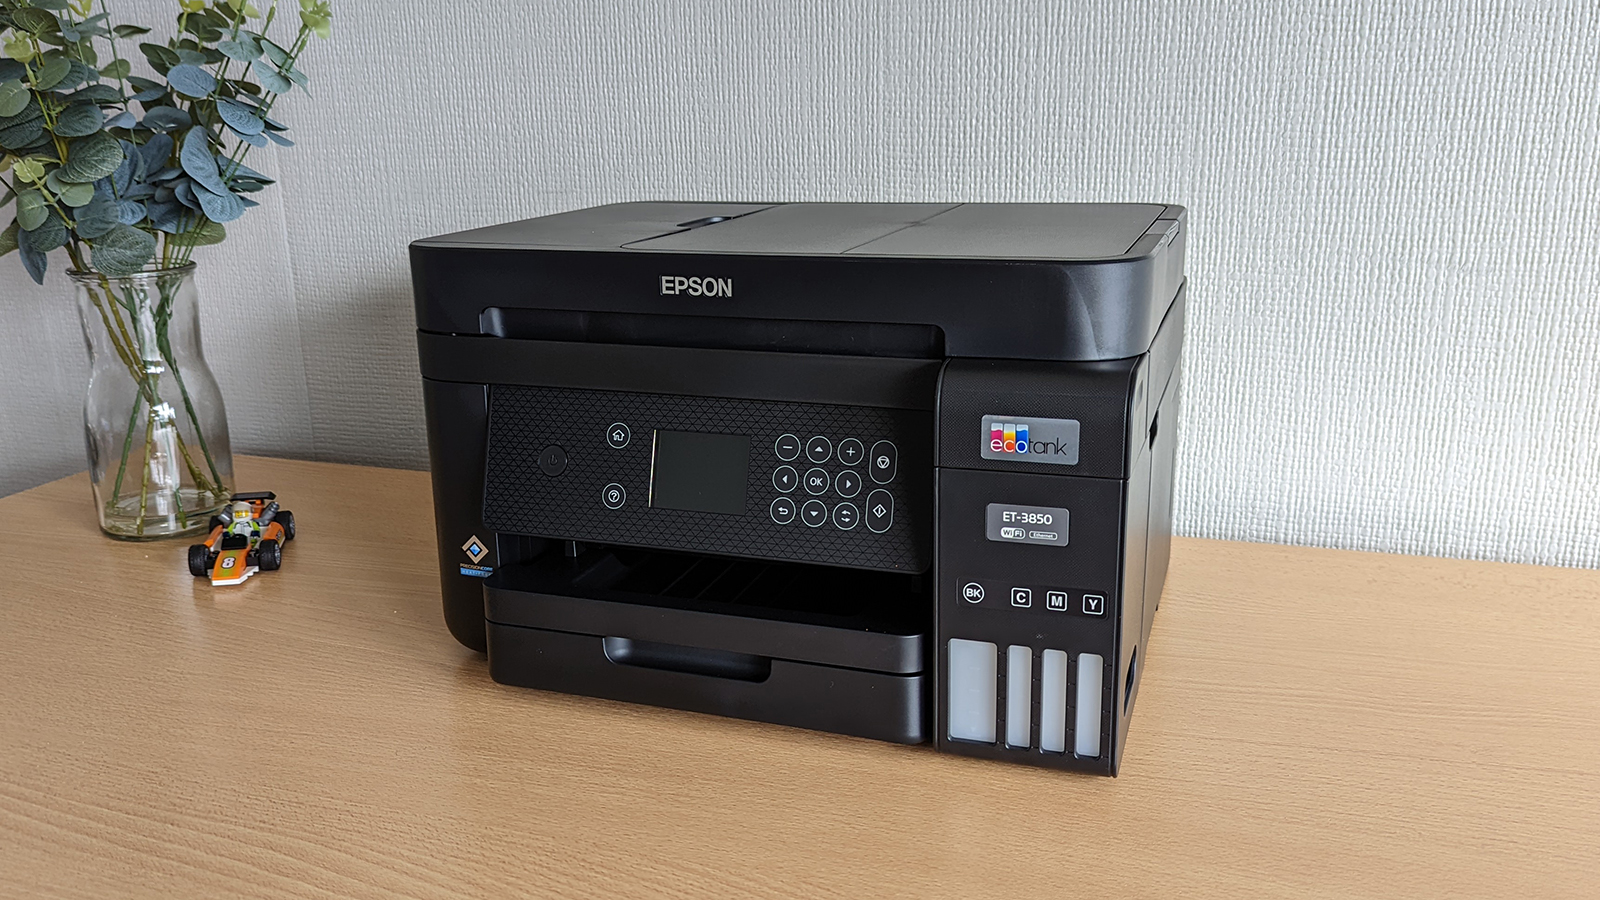 Epson EcoTank ET-3850 review: a reliable, versatile home printer